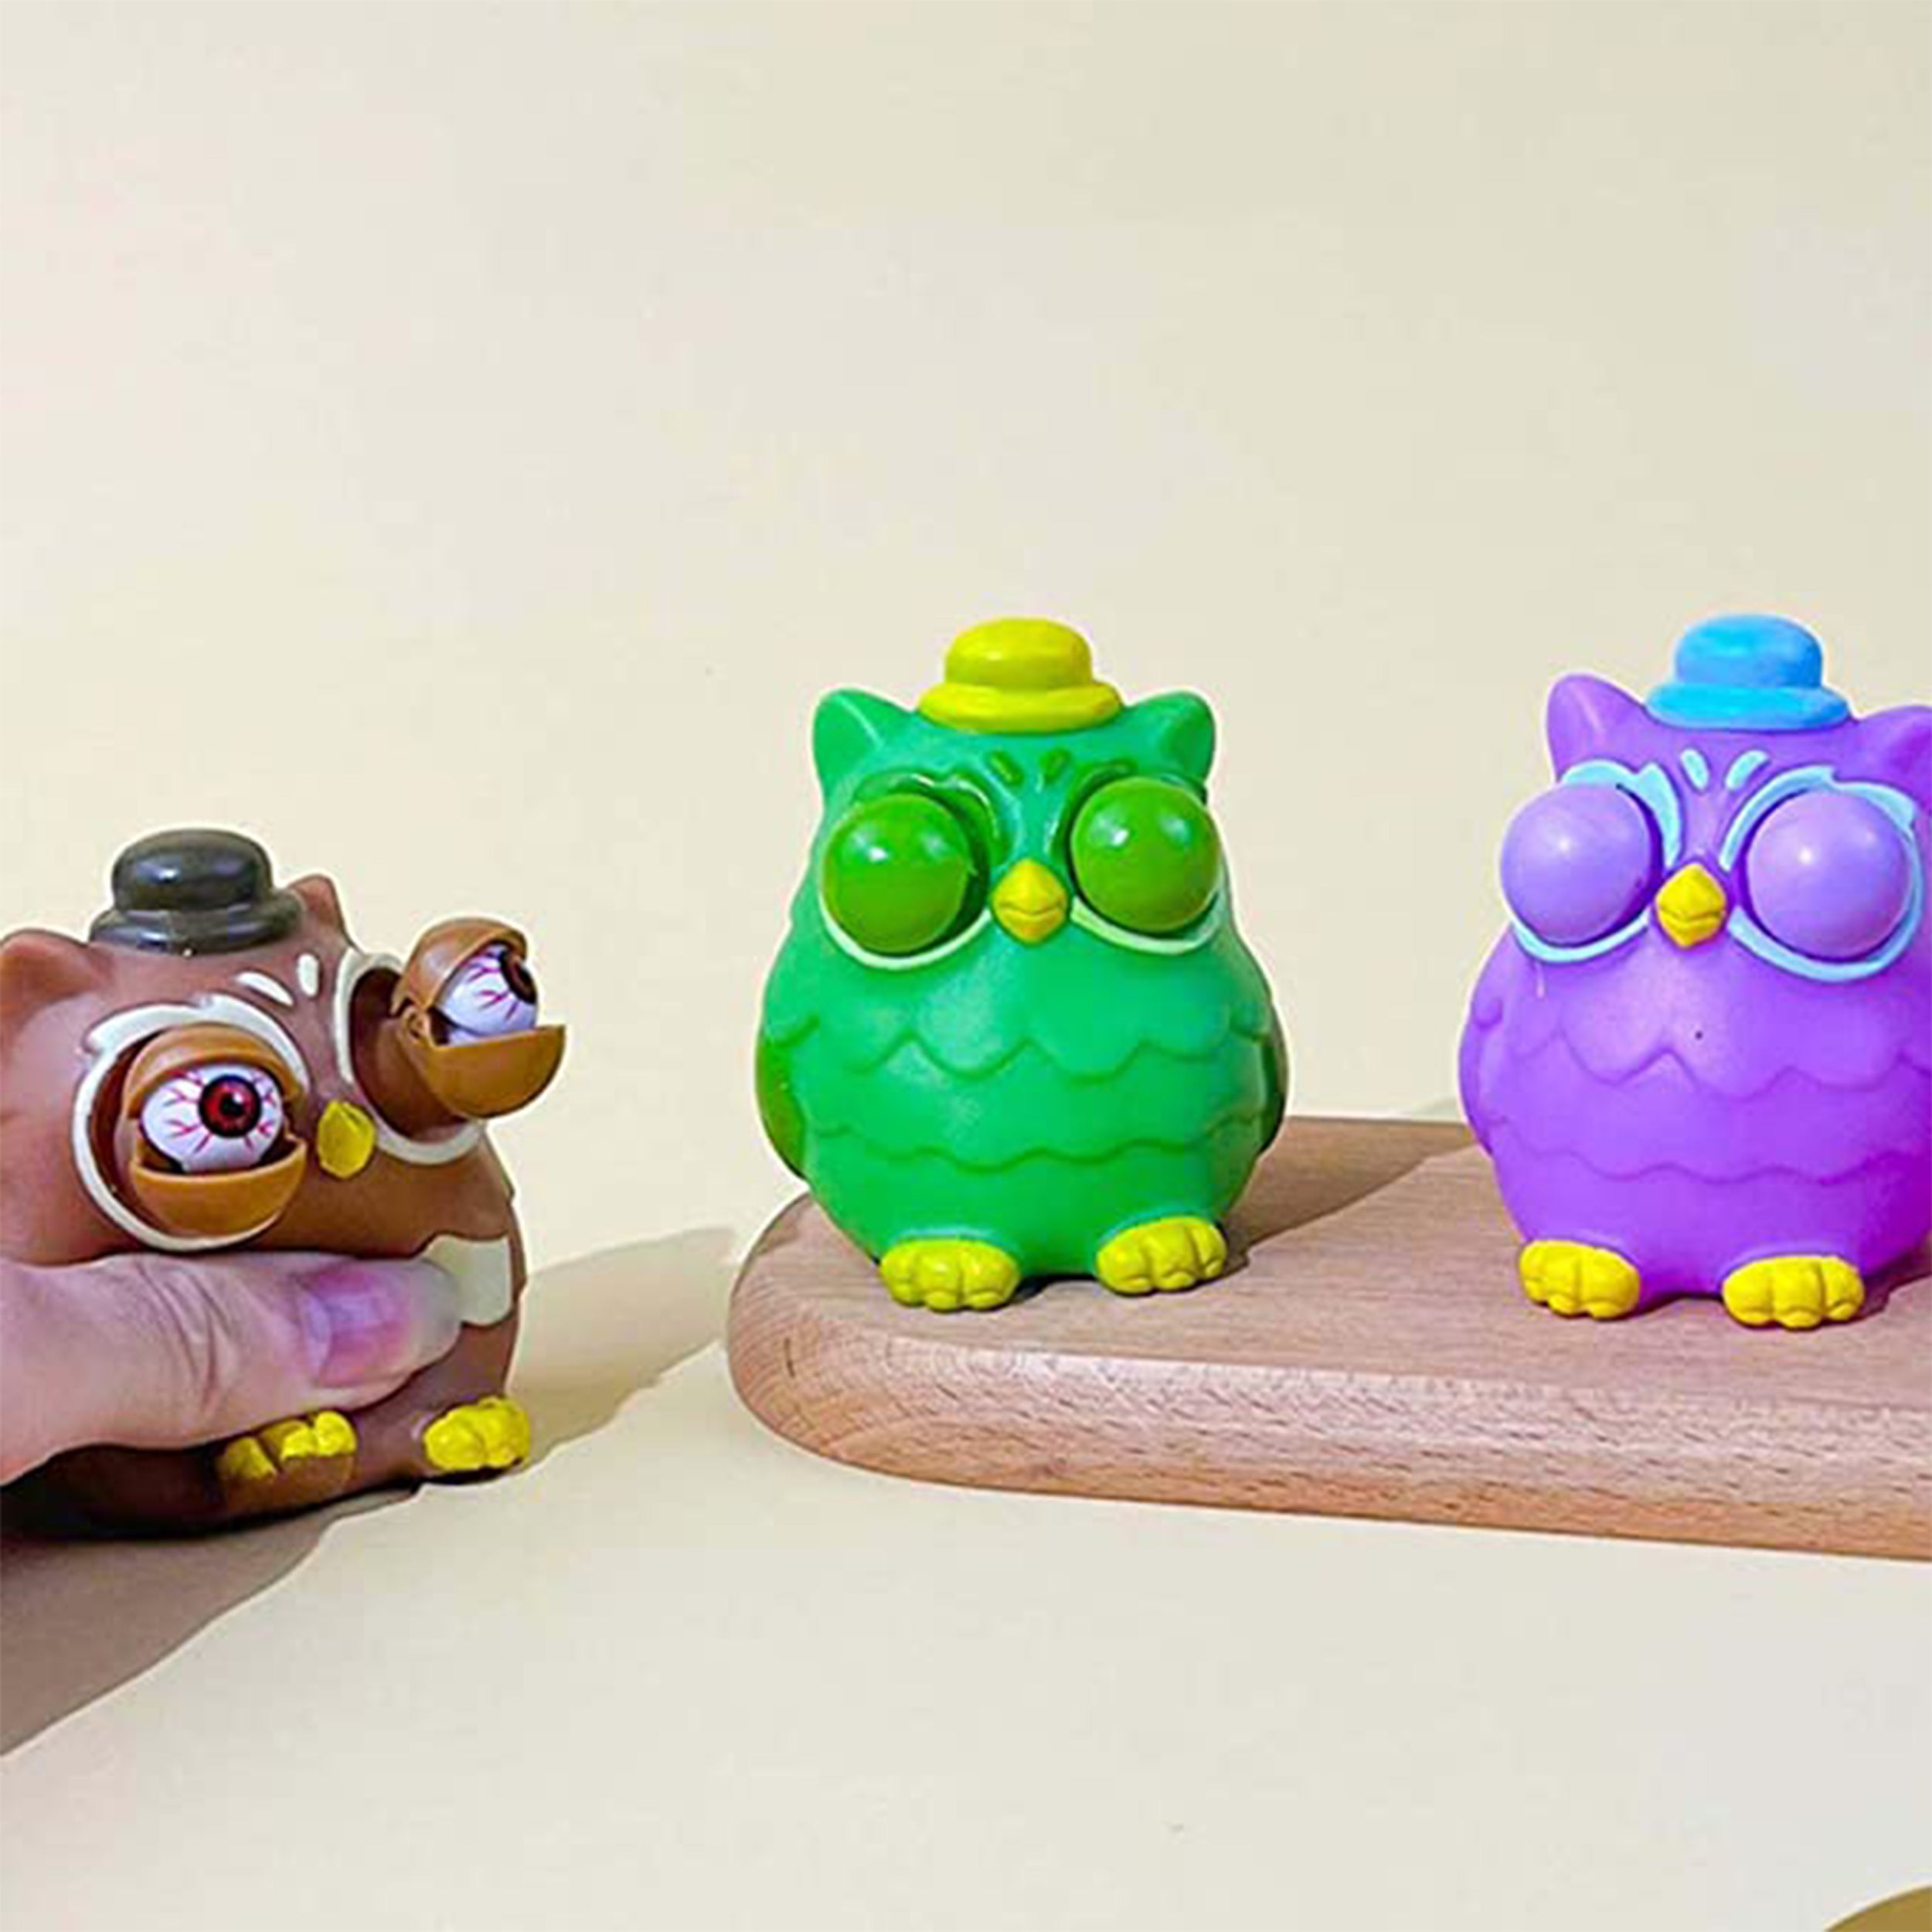 Owl Sensory Stress Fidget Toy